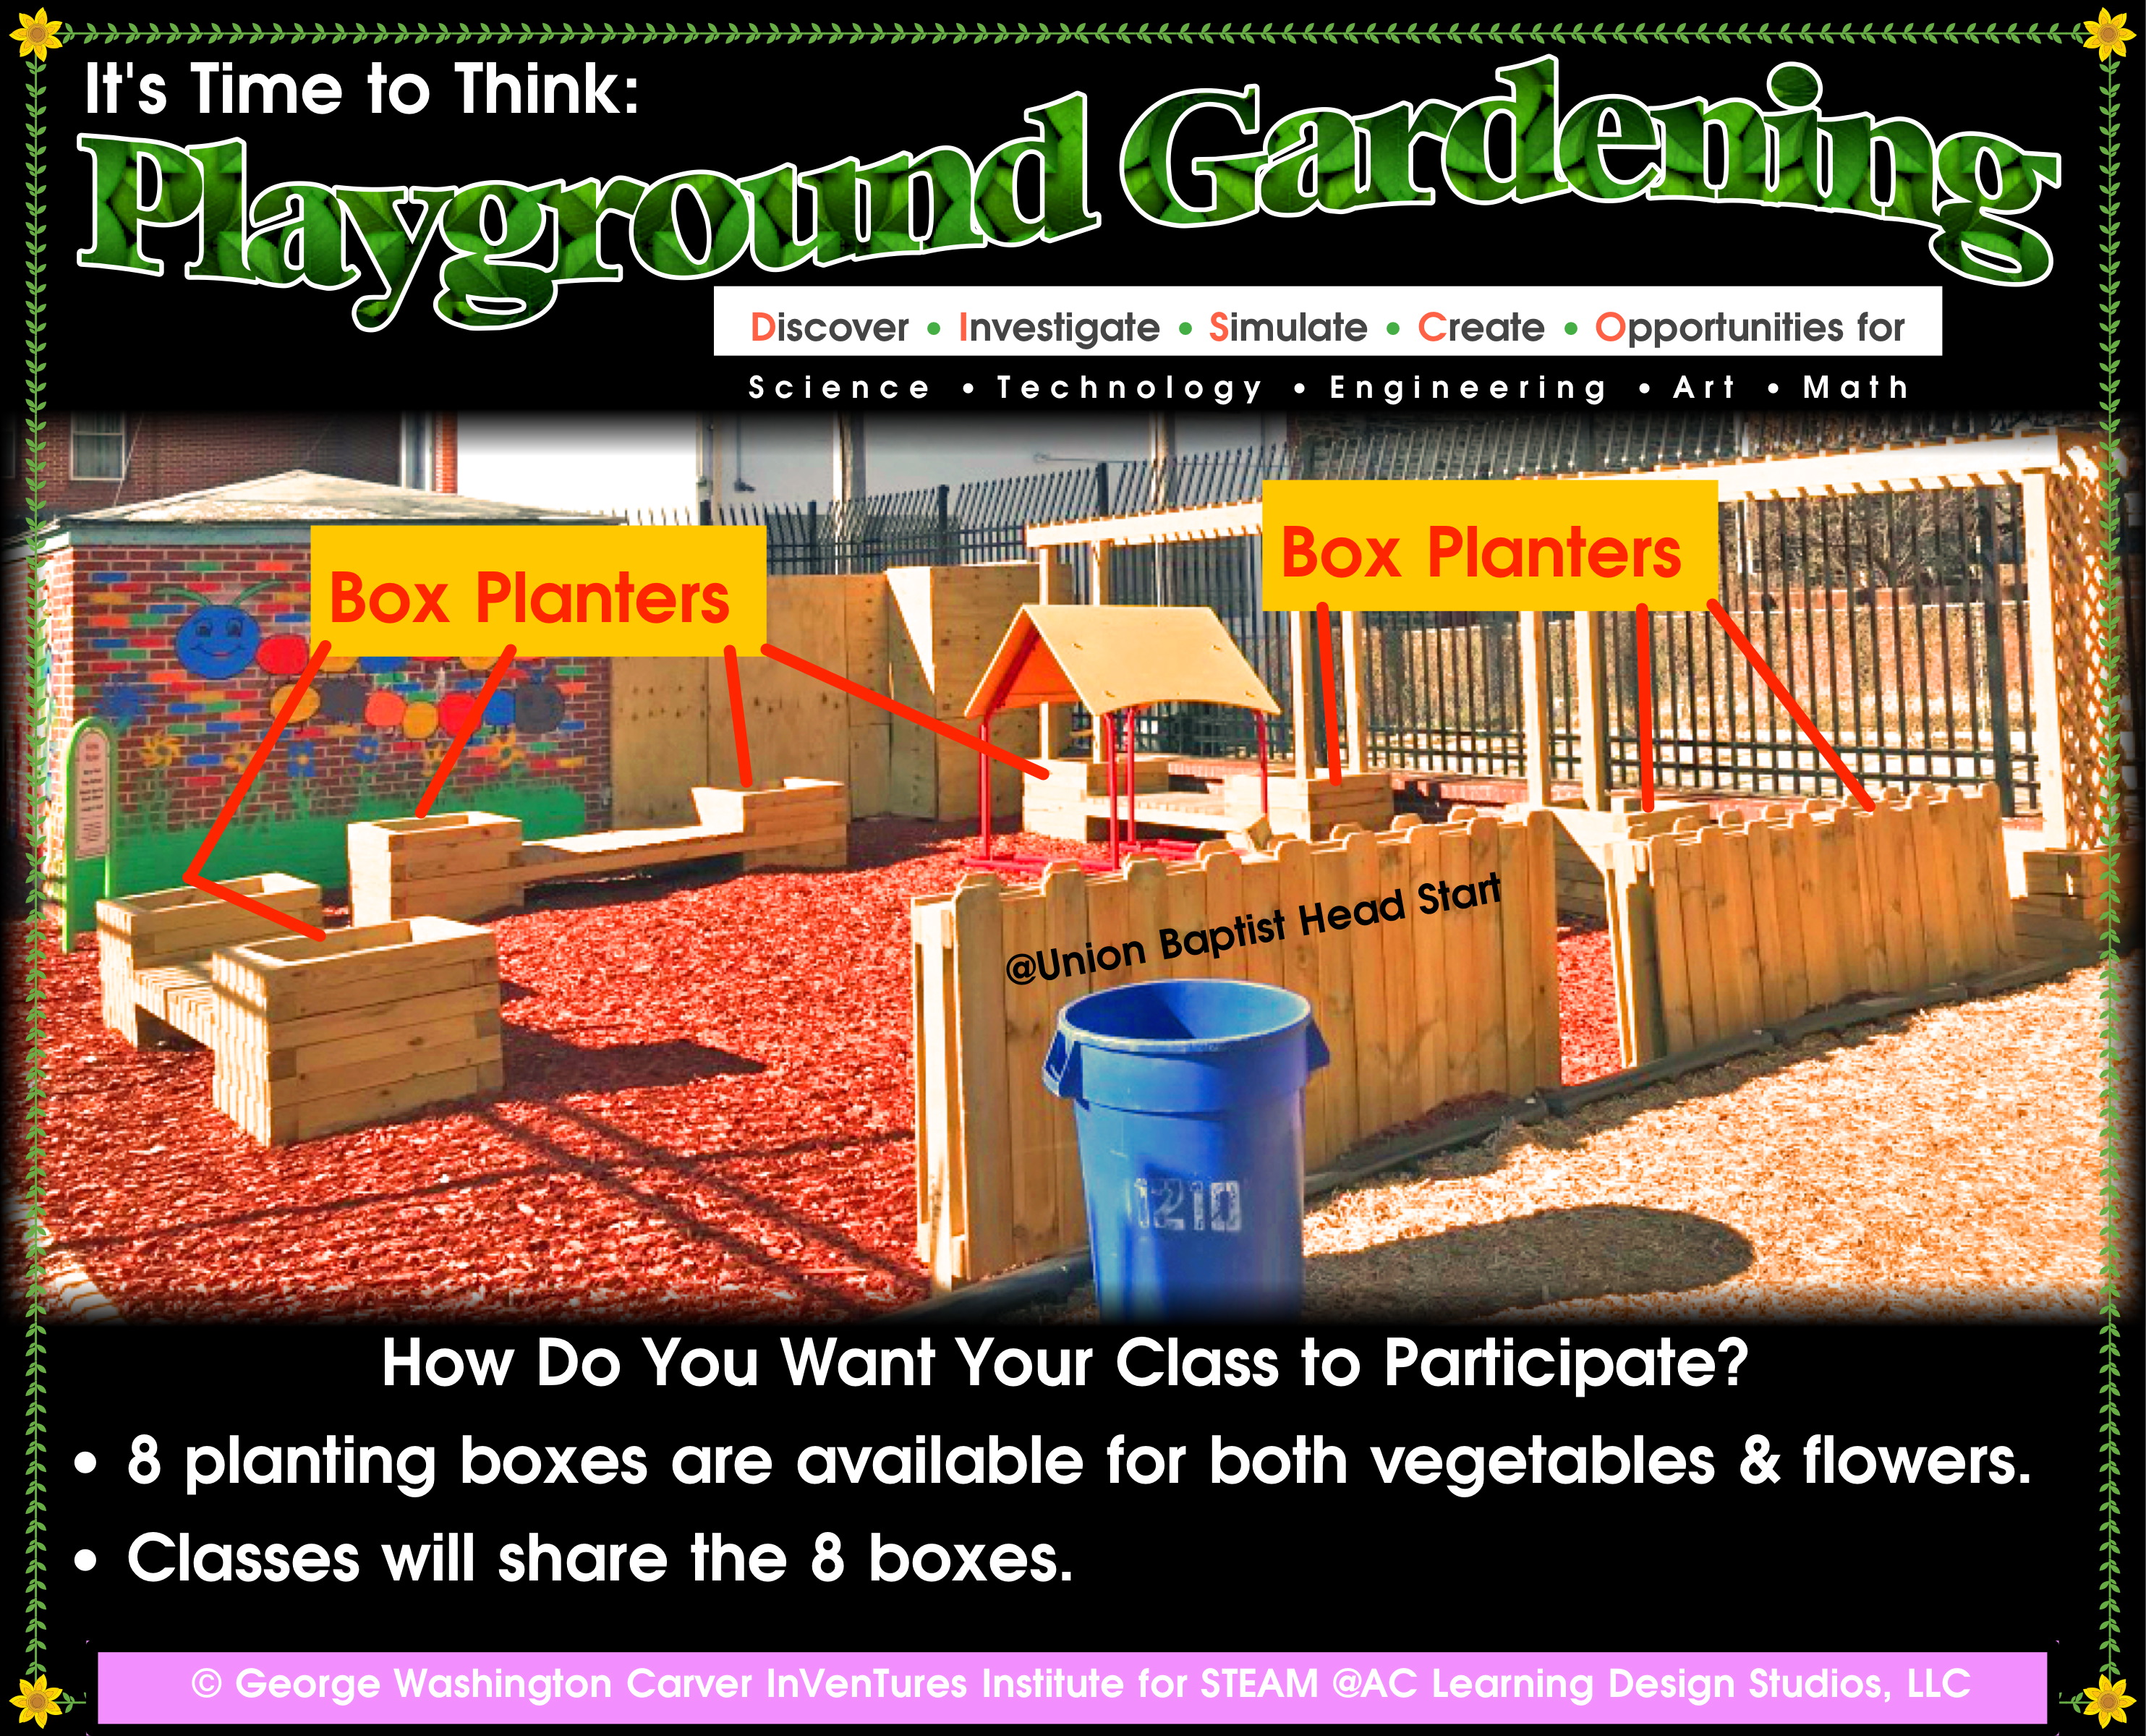 Its_Time_to_Think_Gardening_web.jpeg